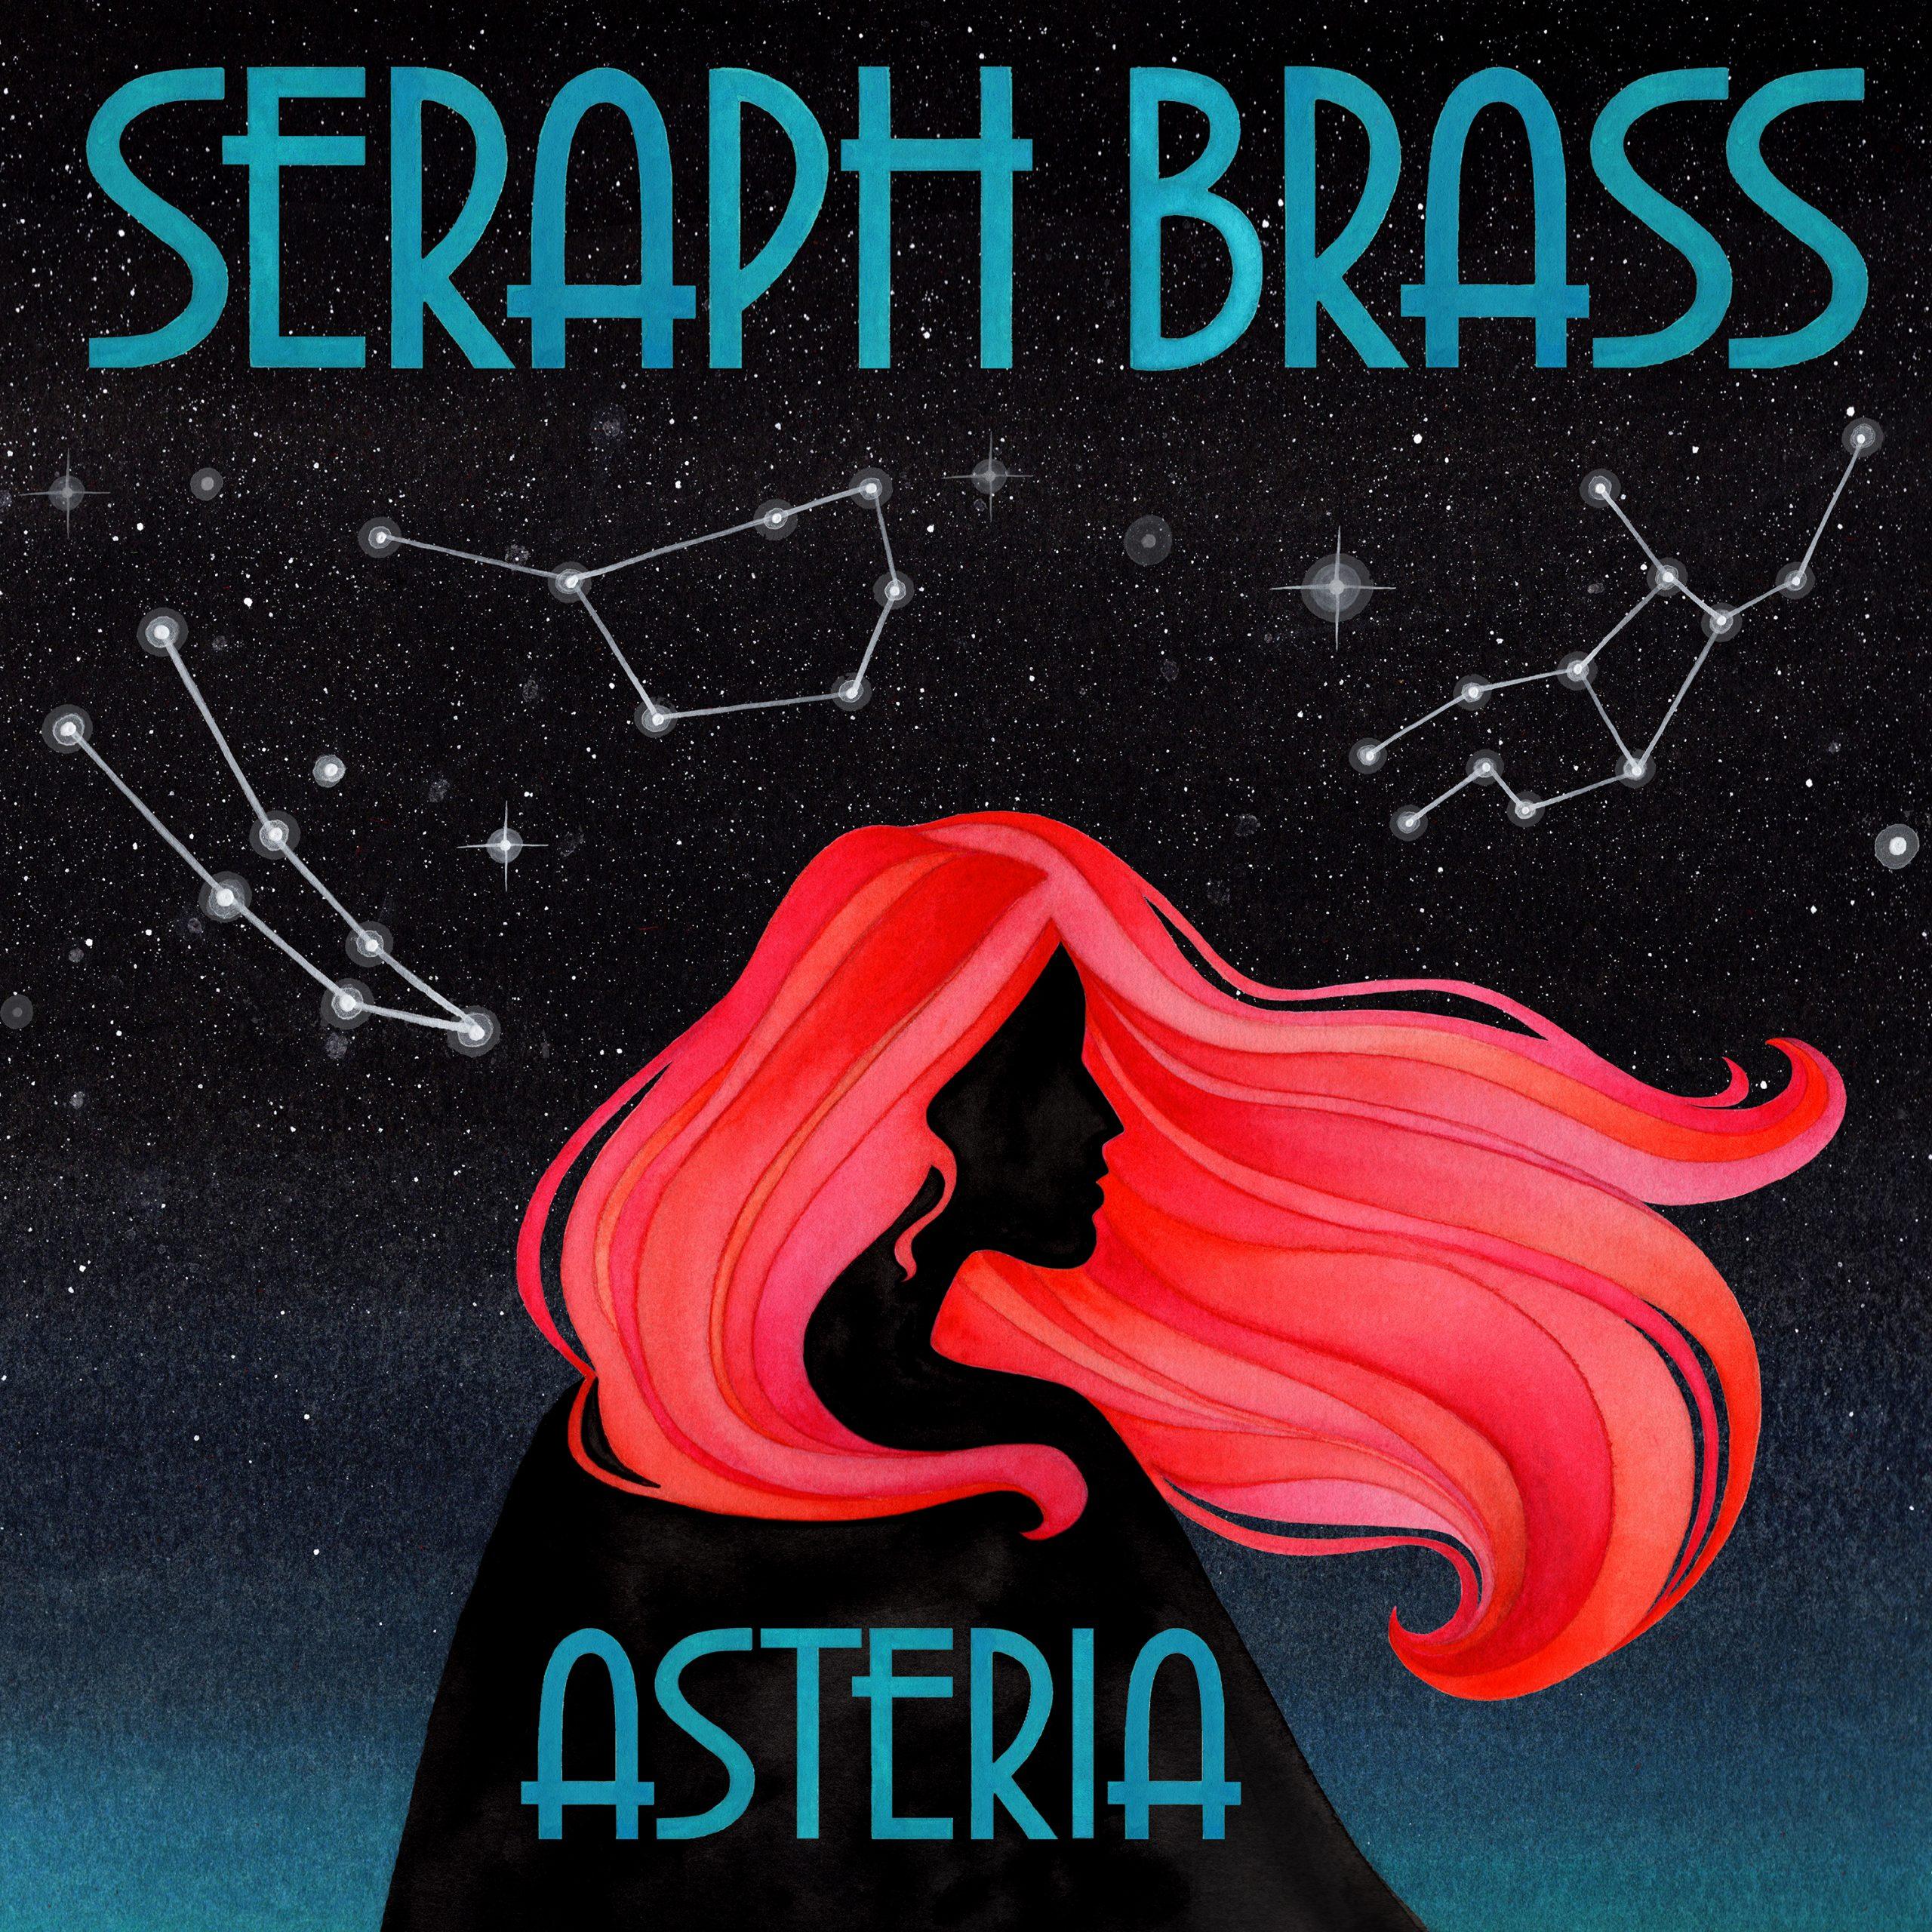 Asteria – Seraph Brass